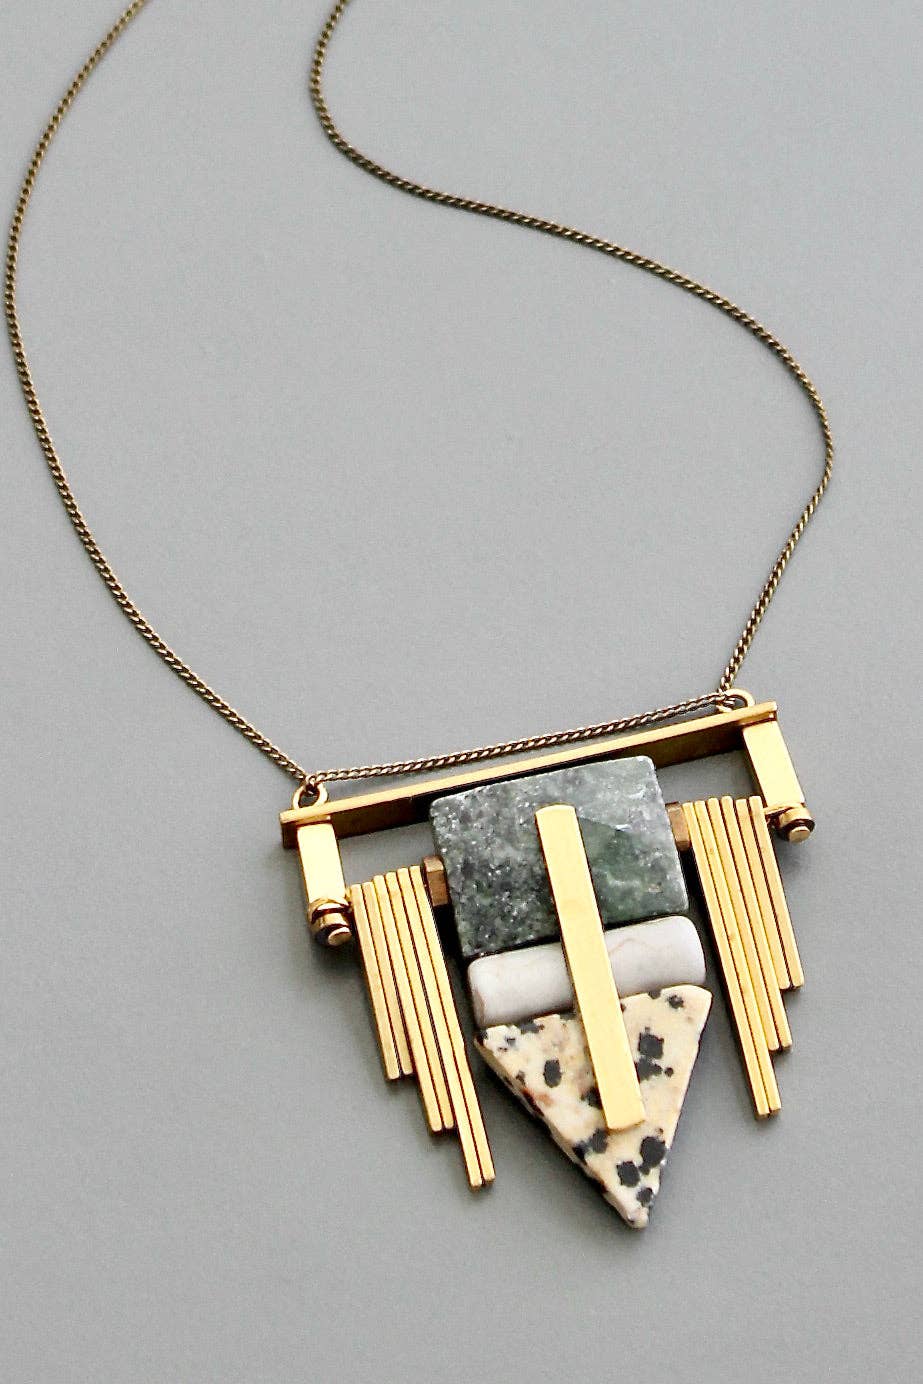 Geometric serpentine and jasper pendant necklace